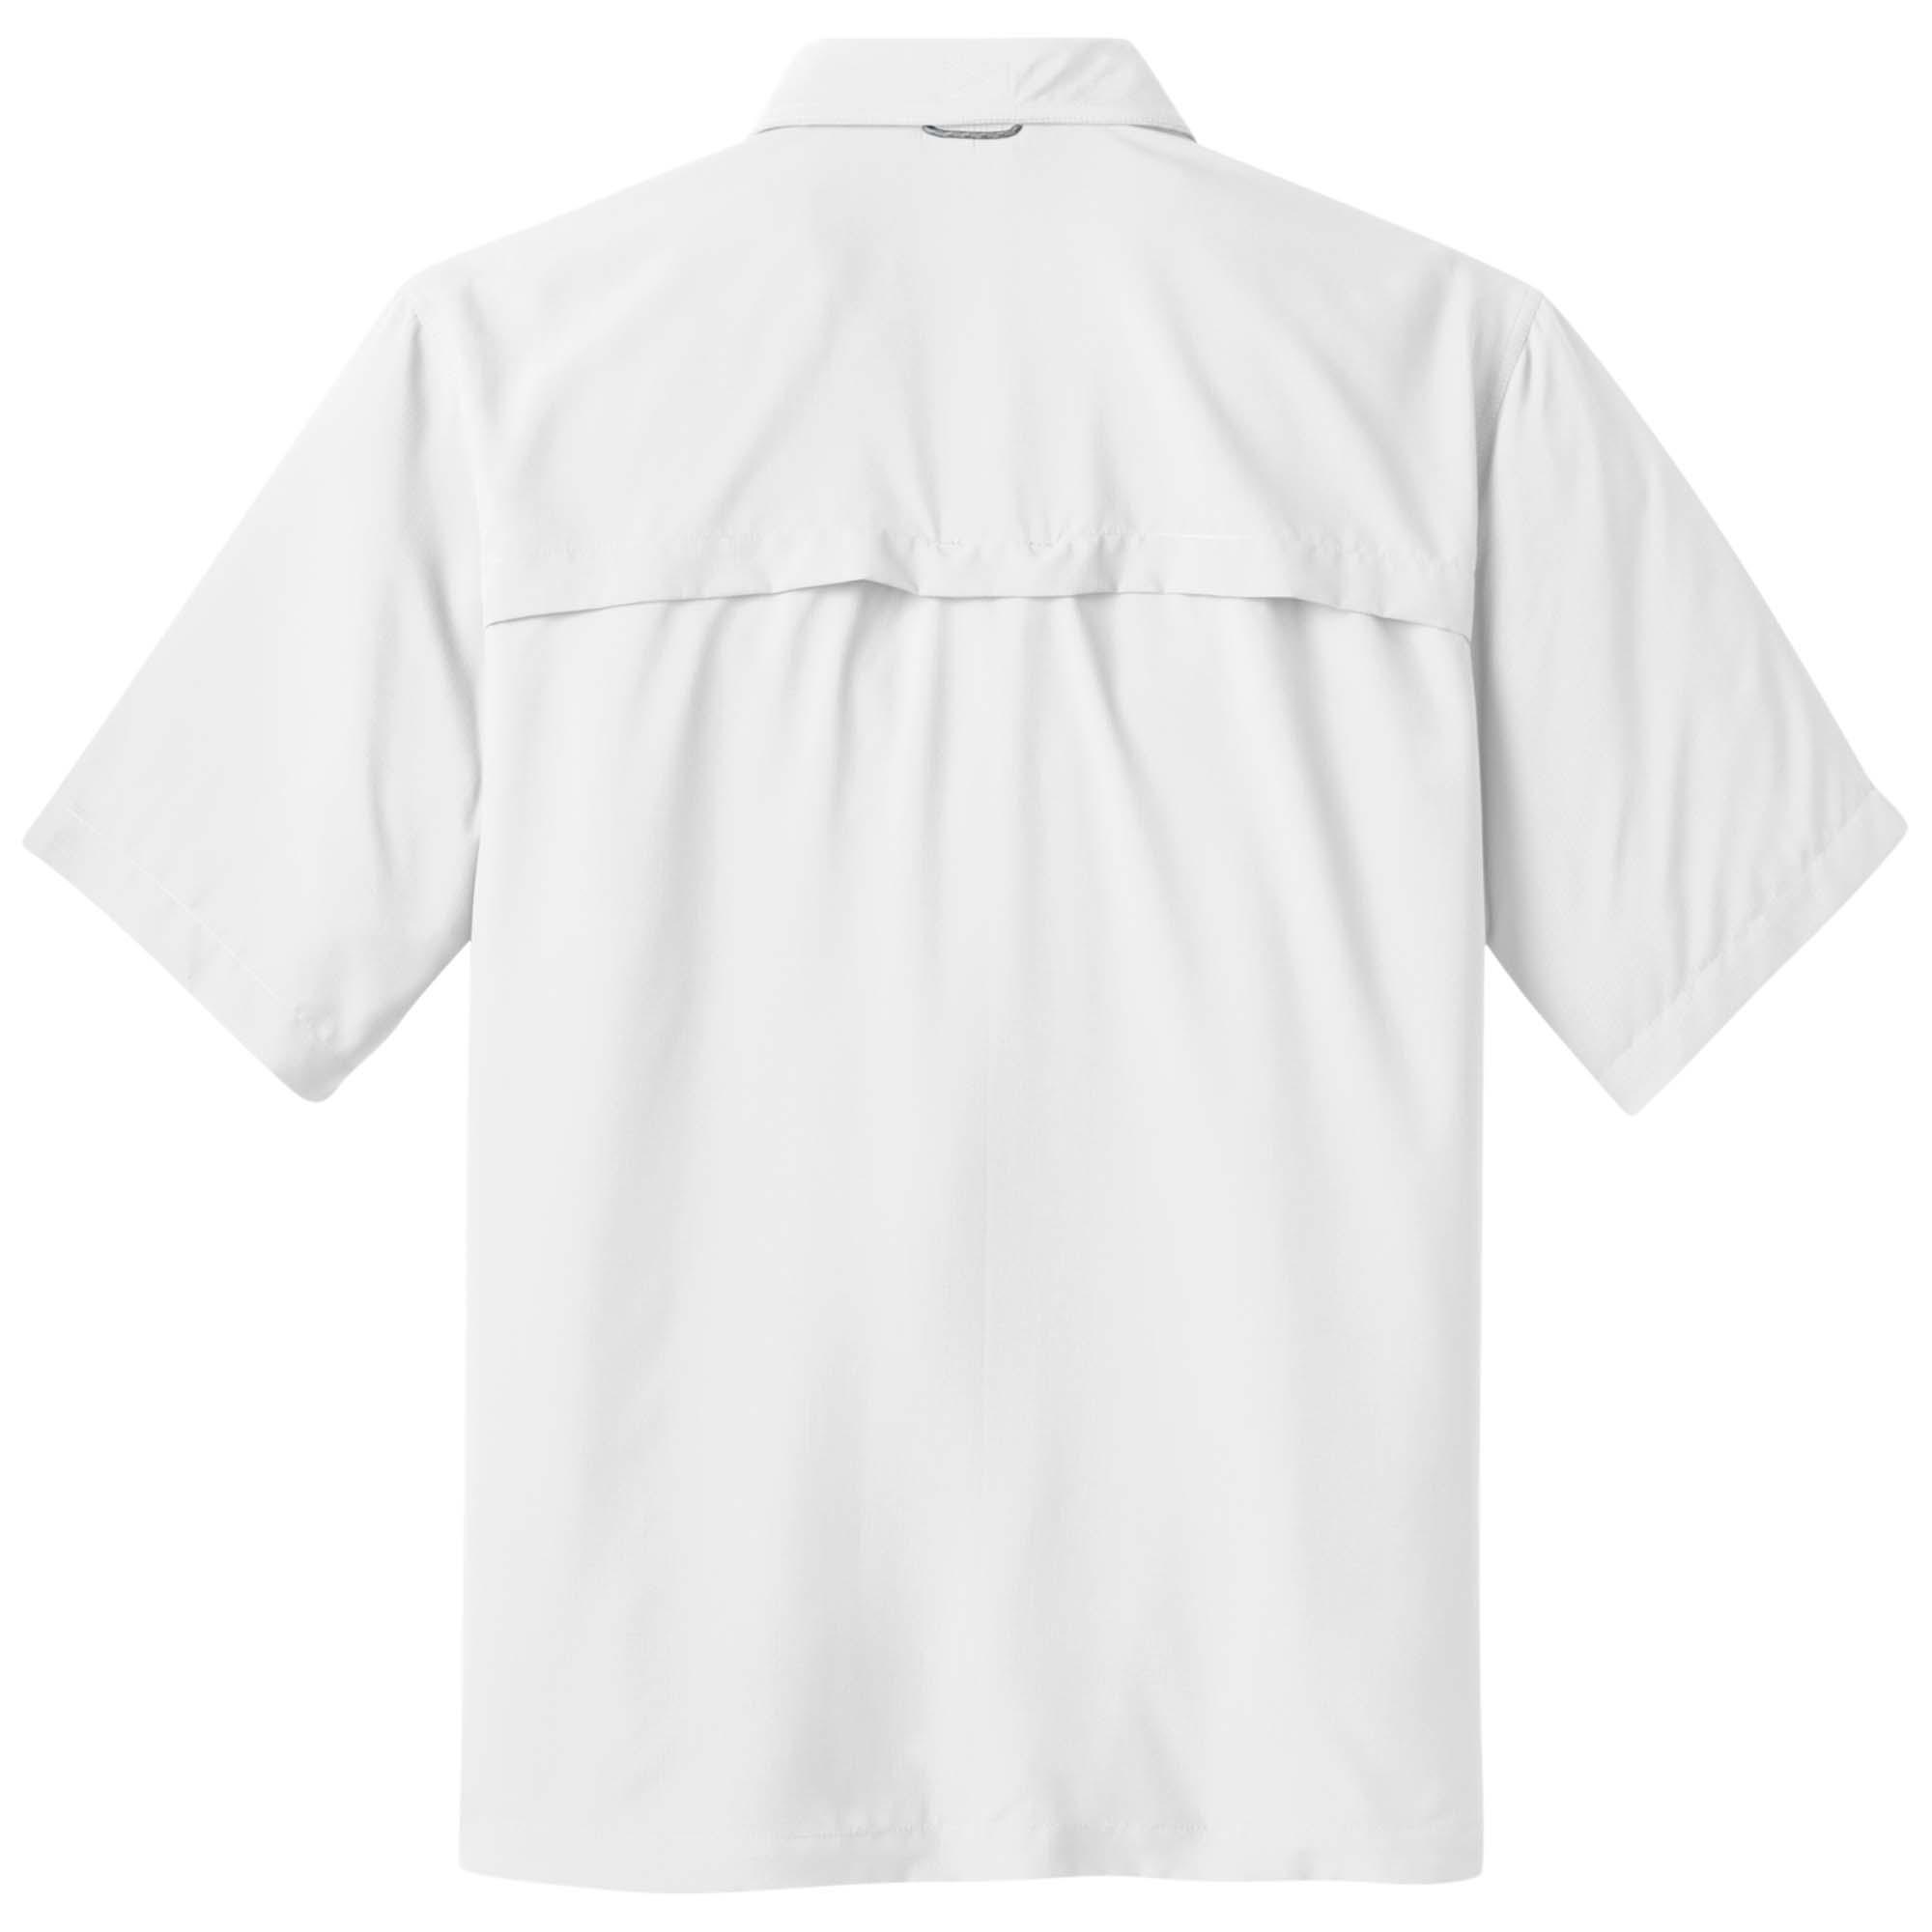 Eddie Bauer EB602 Short Sleeve Performance Fishing Shirt - White